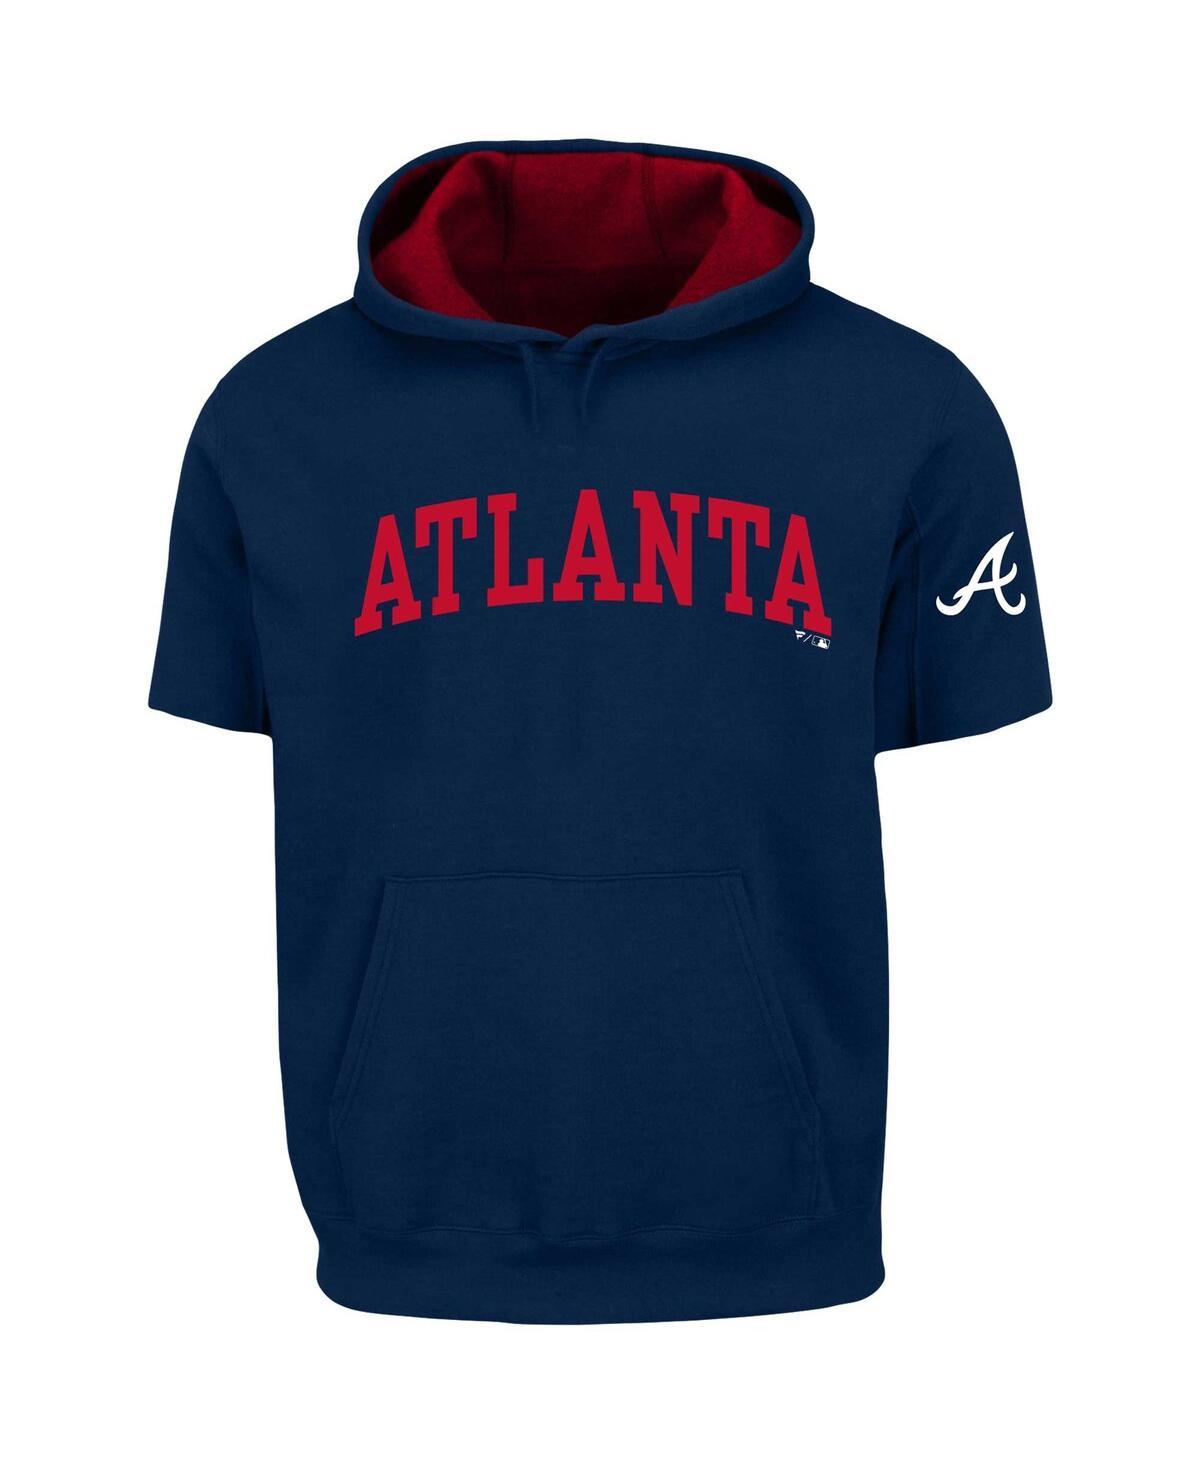 Men's Navy/White Atlanta Braves Big & Tall Pullover Sweatshirt